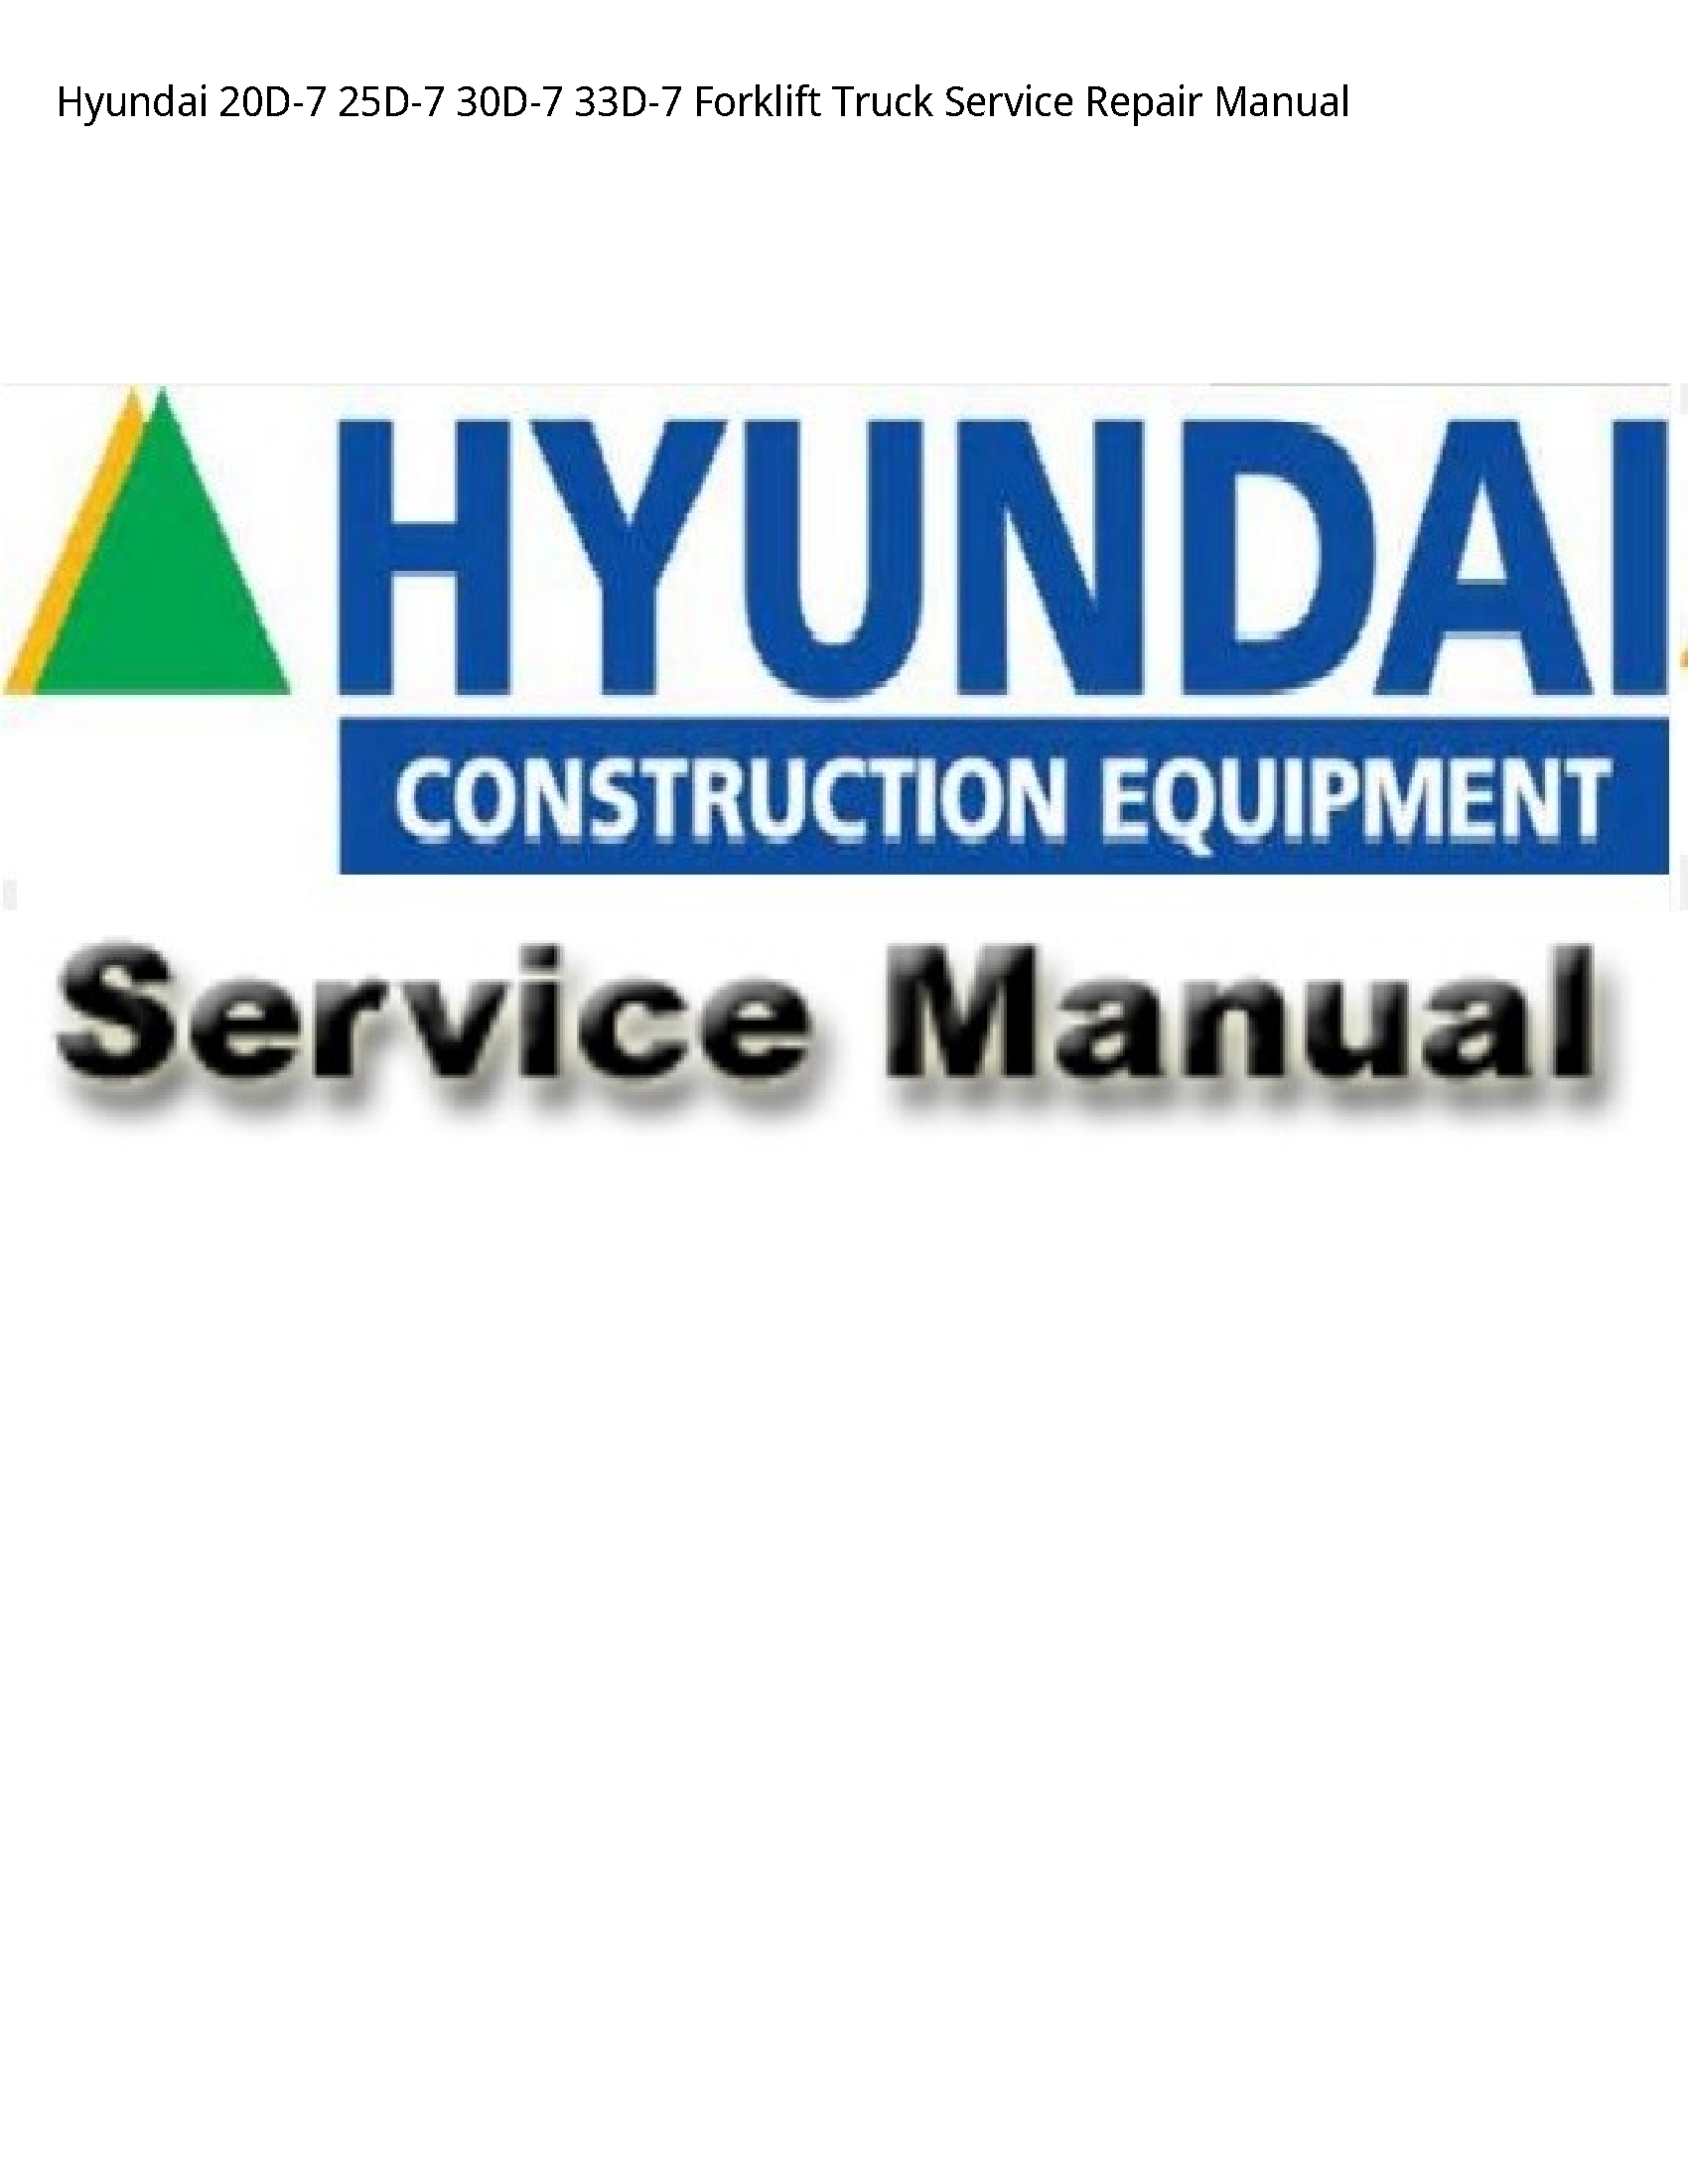 Hyundai 20D-7 Forklift Truck manual